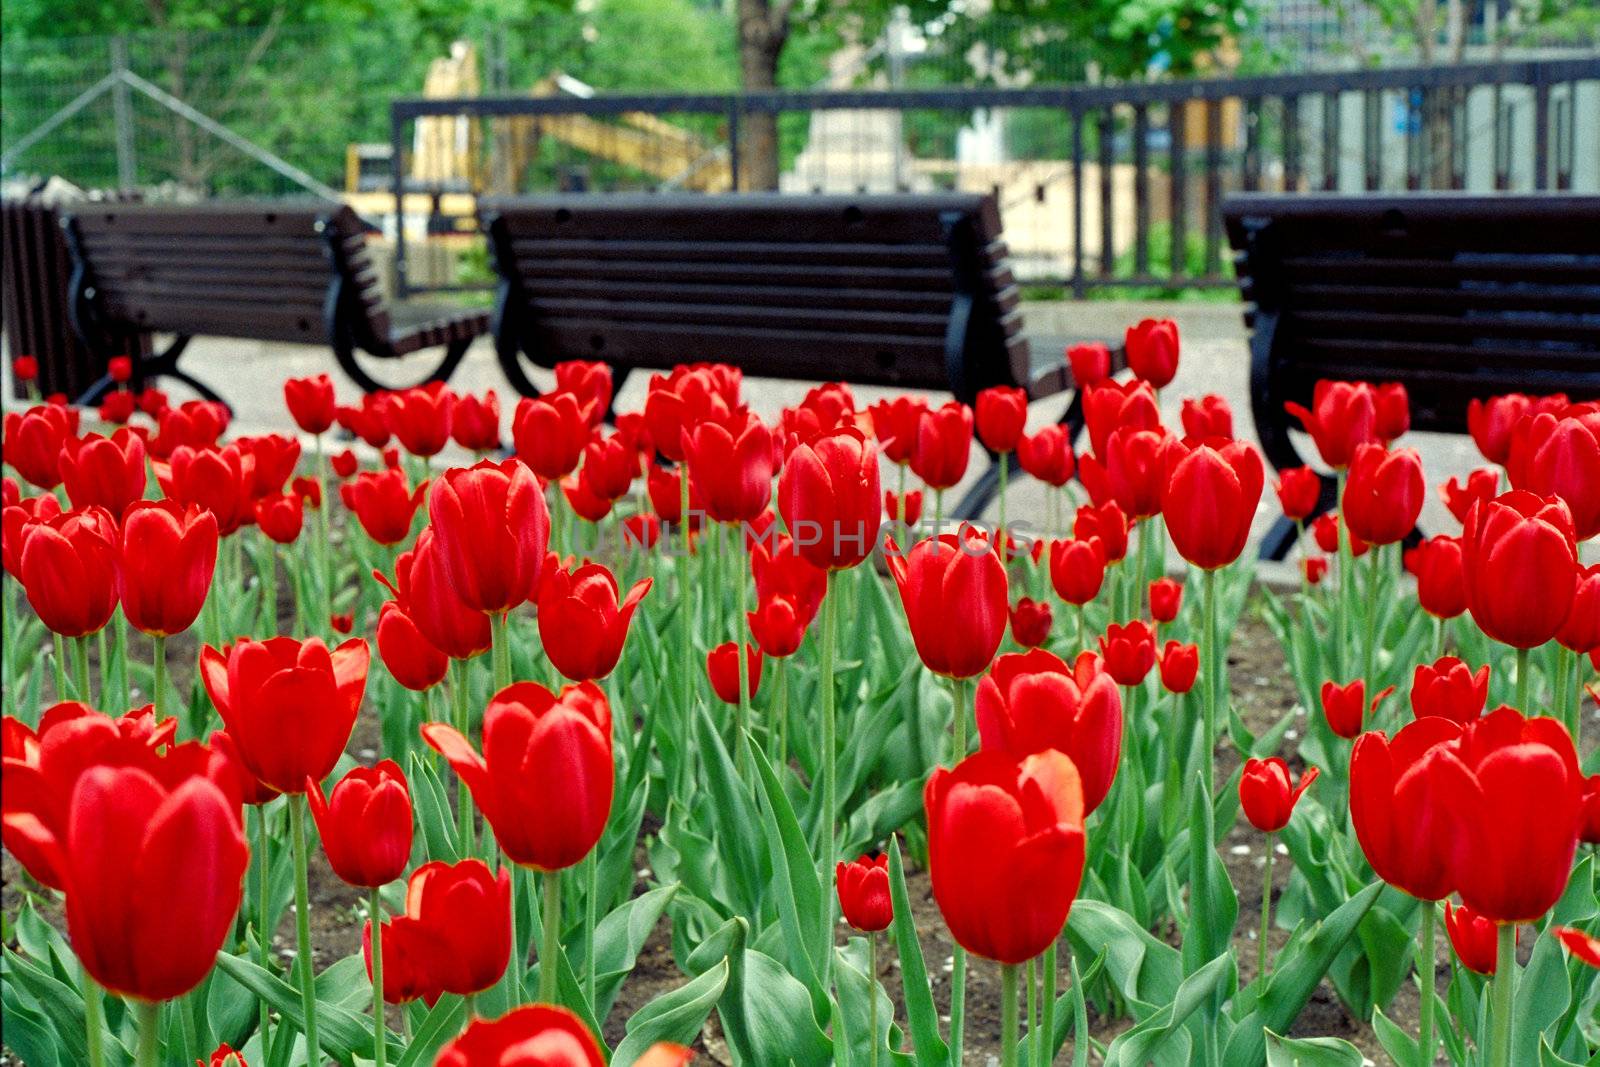 Tulipe in park by mypstudio